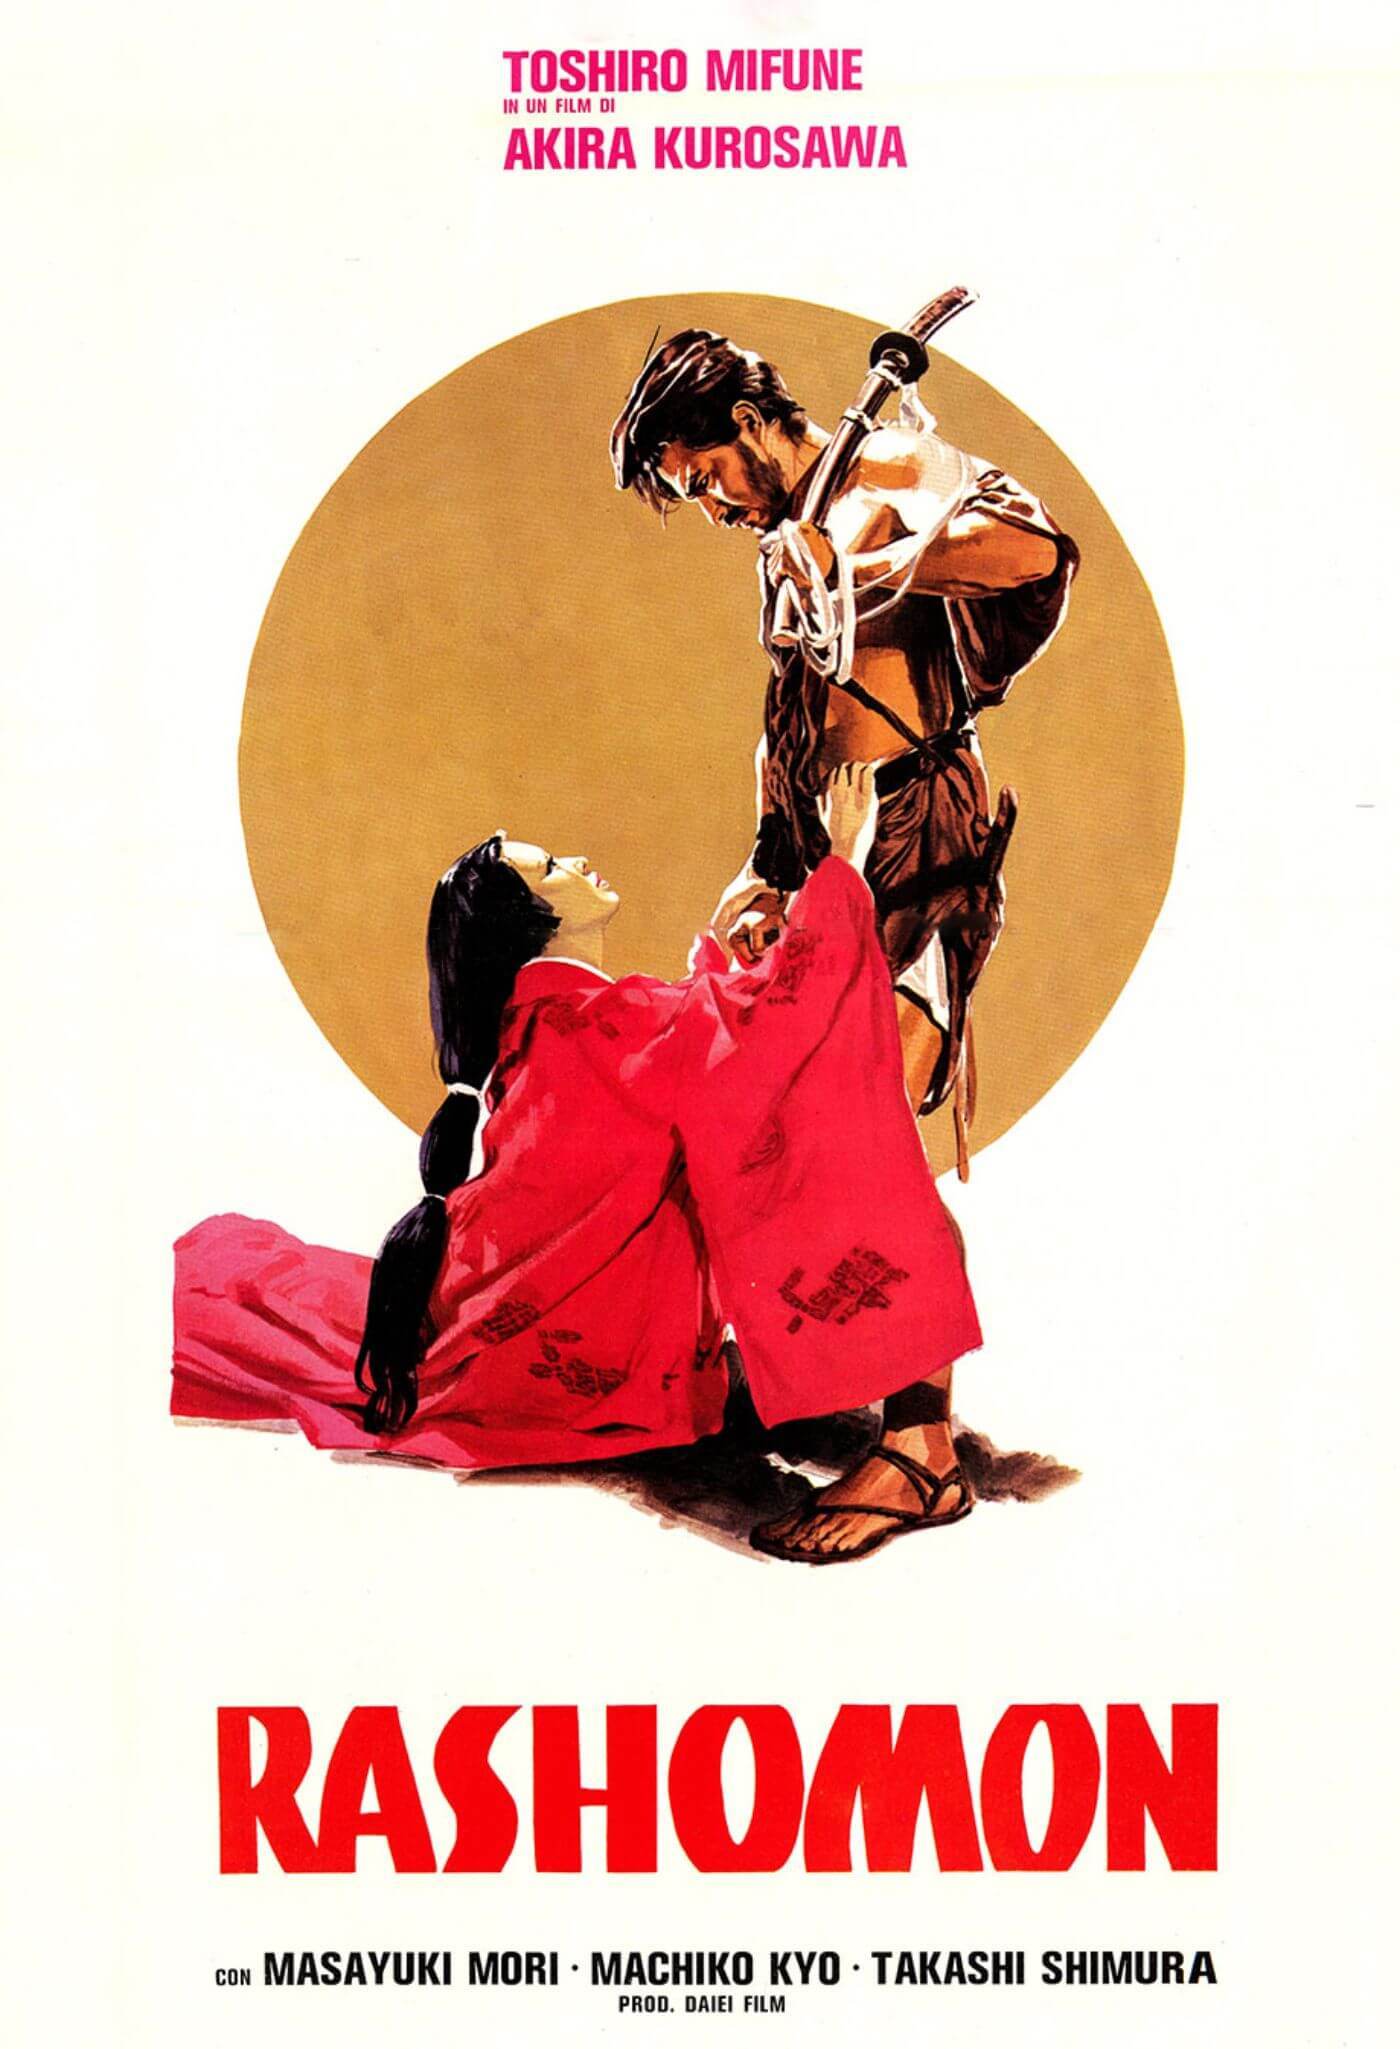 Rashomon - Akira Kurosawa Japanese Cinema Masterpiece - Vintage Graphic Art  Movie Poster - Framed Prints by Kentura, Buy Posters, Frames, Canvas &  Digital Art Prints